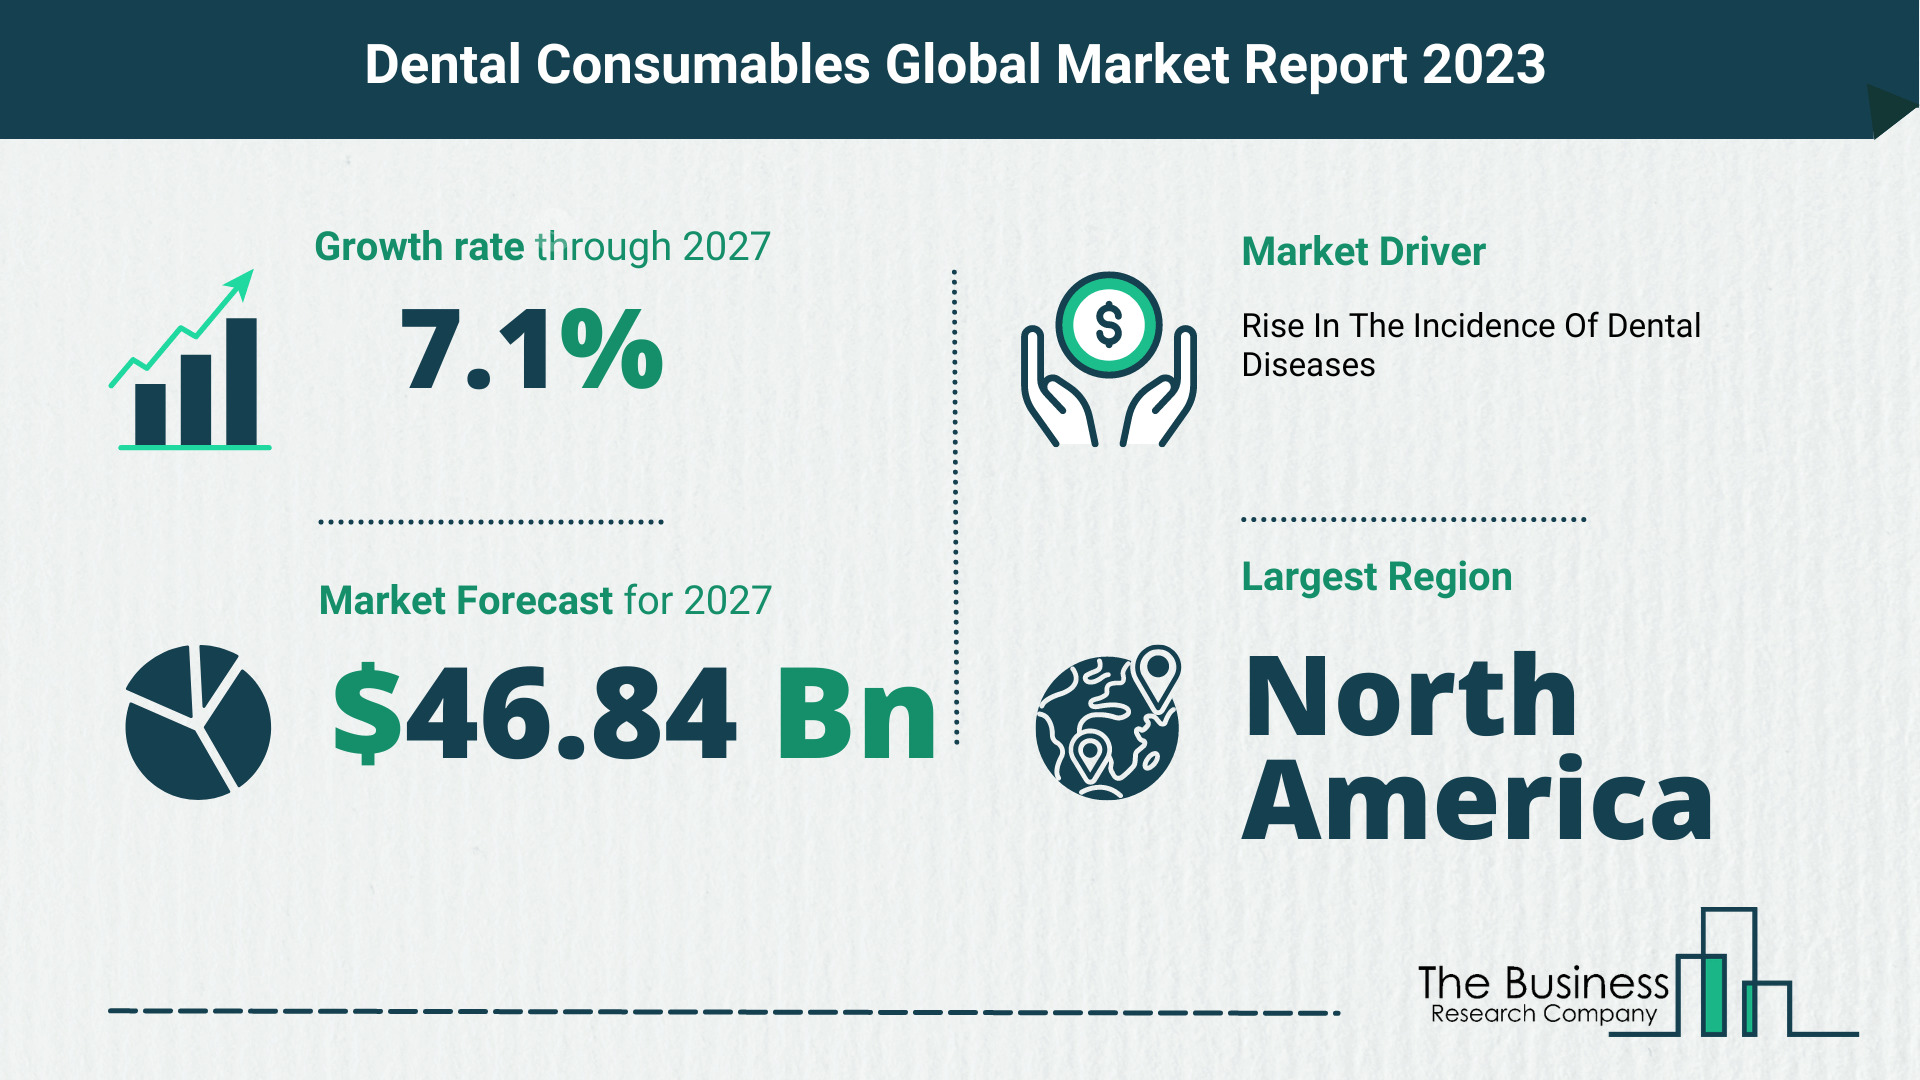 Dental Consumables Market